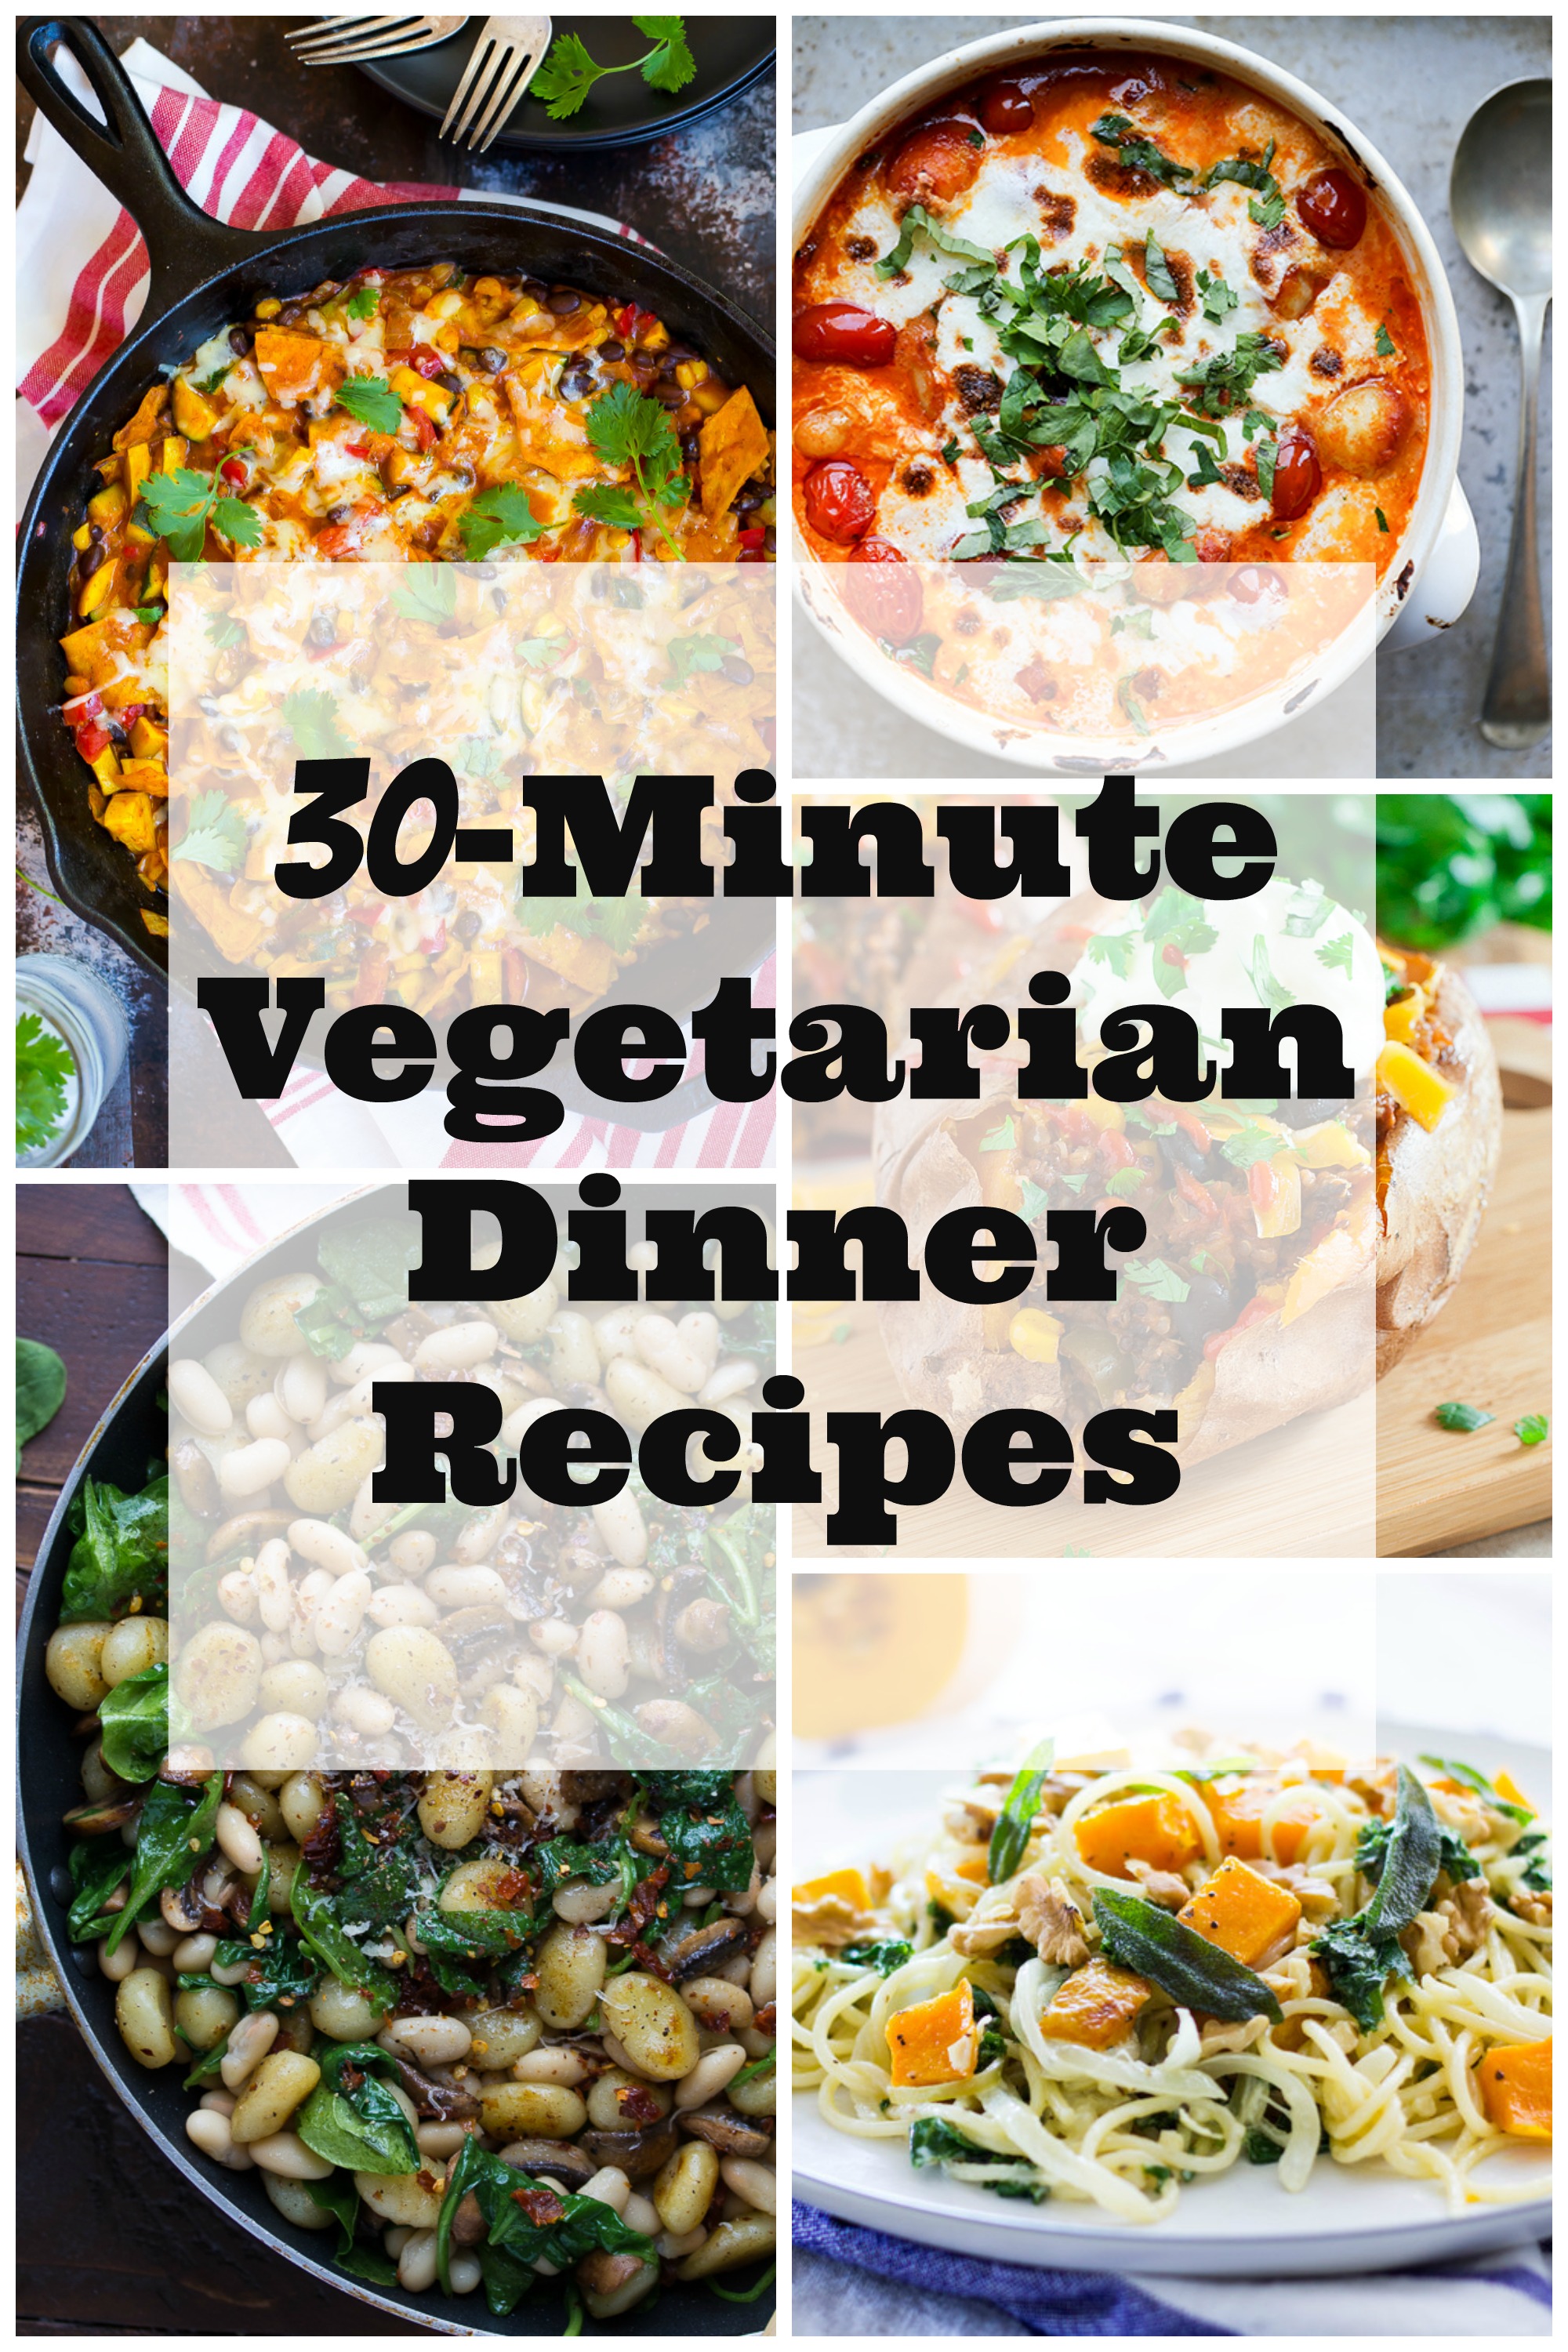 30-Minute Vegetarian Dinner Recipes - She Likes Food